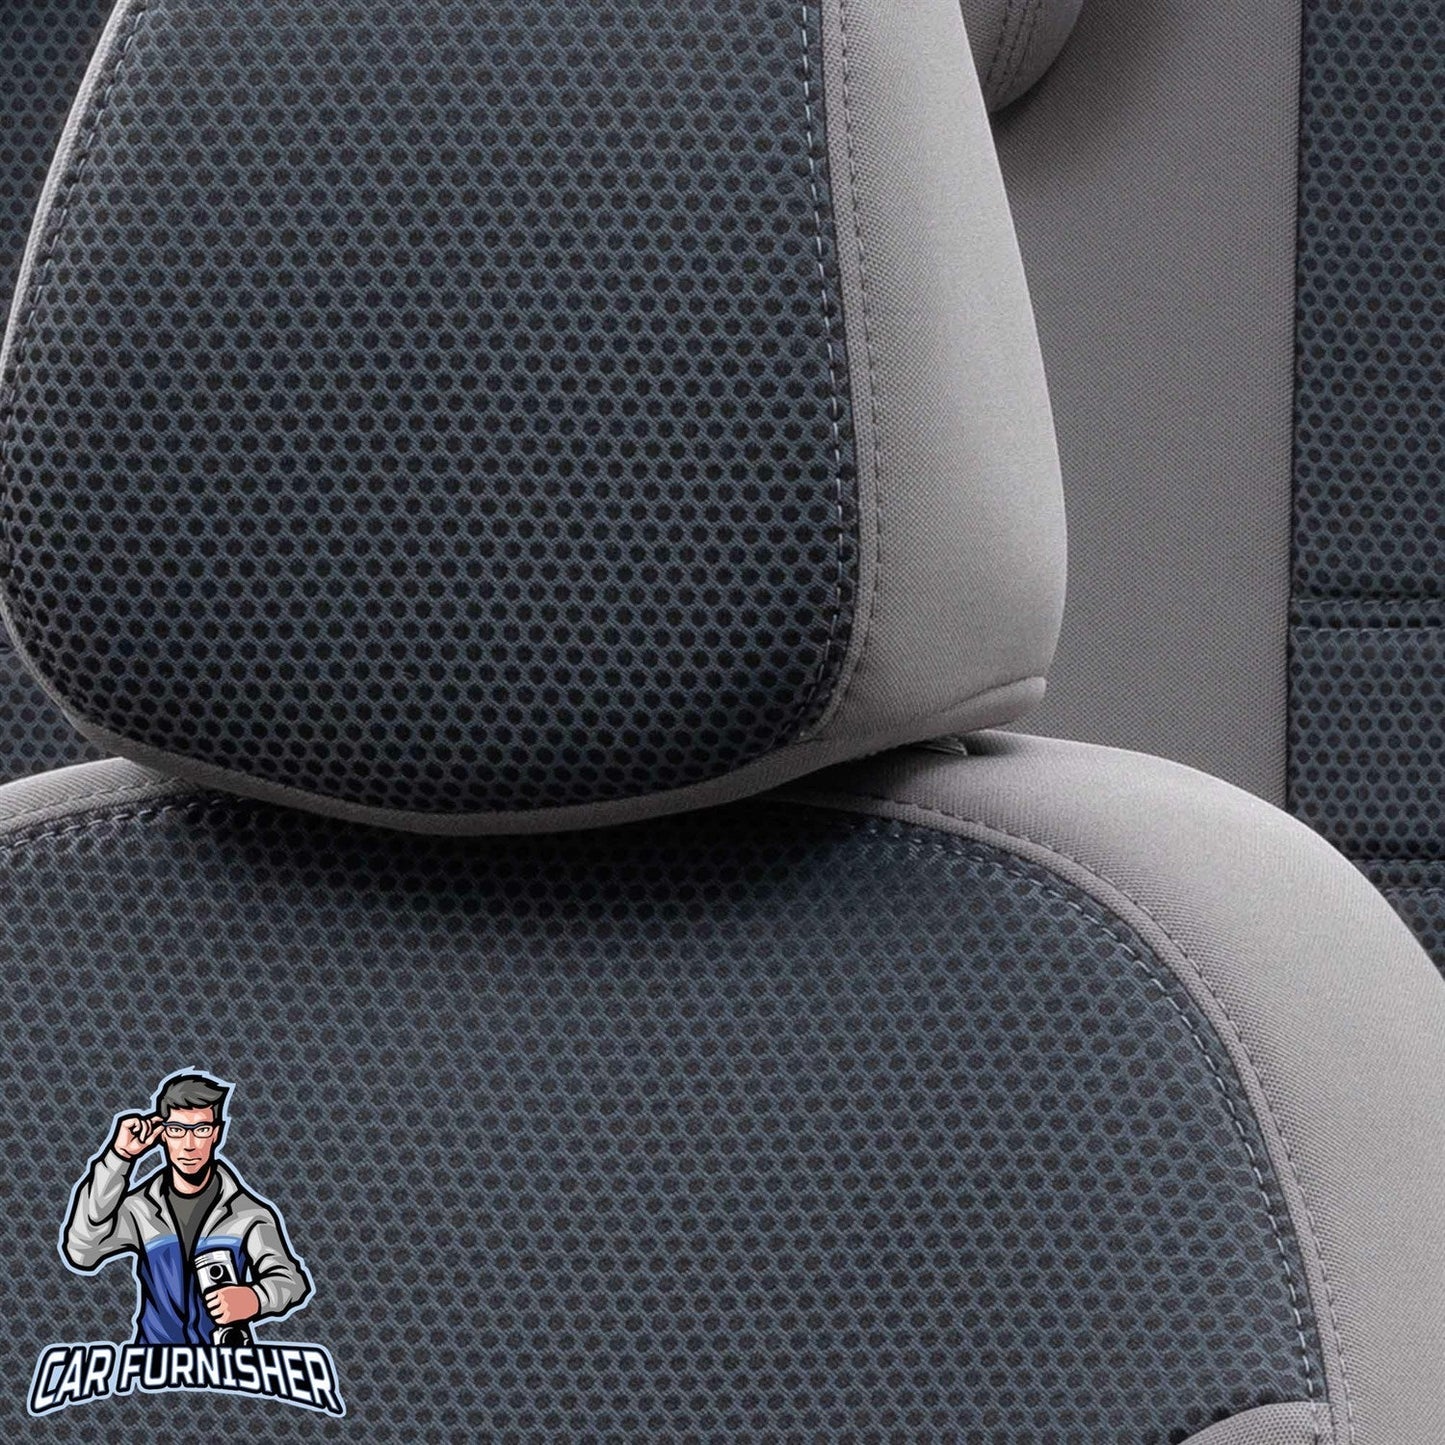 Ford Ecosport Seat Covers Original Jacquard Design Smoked Jacquard Fabric